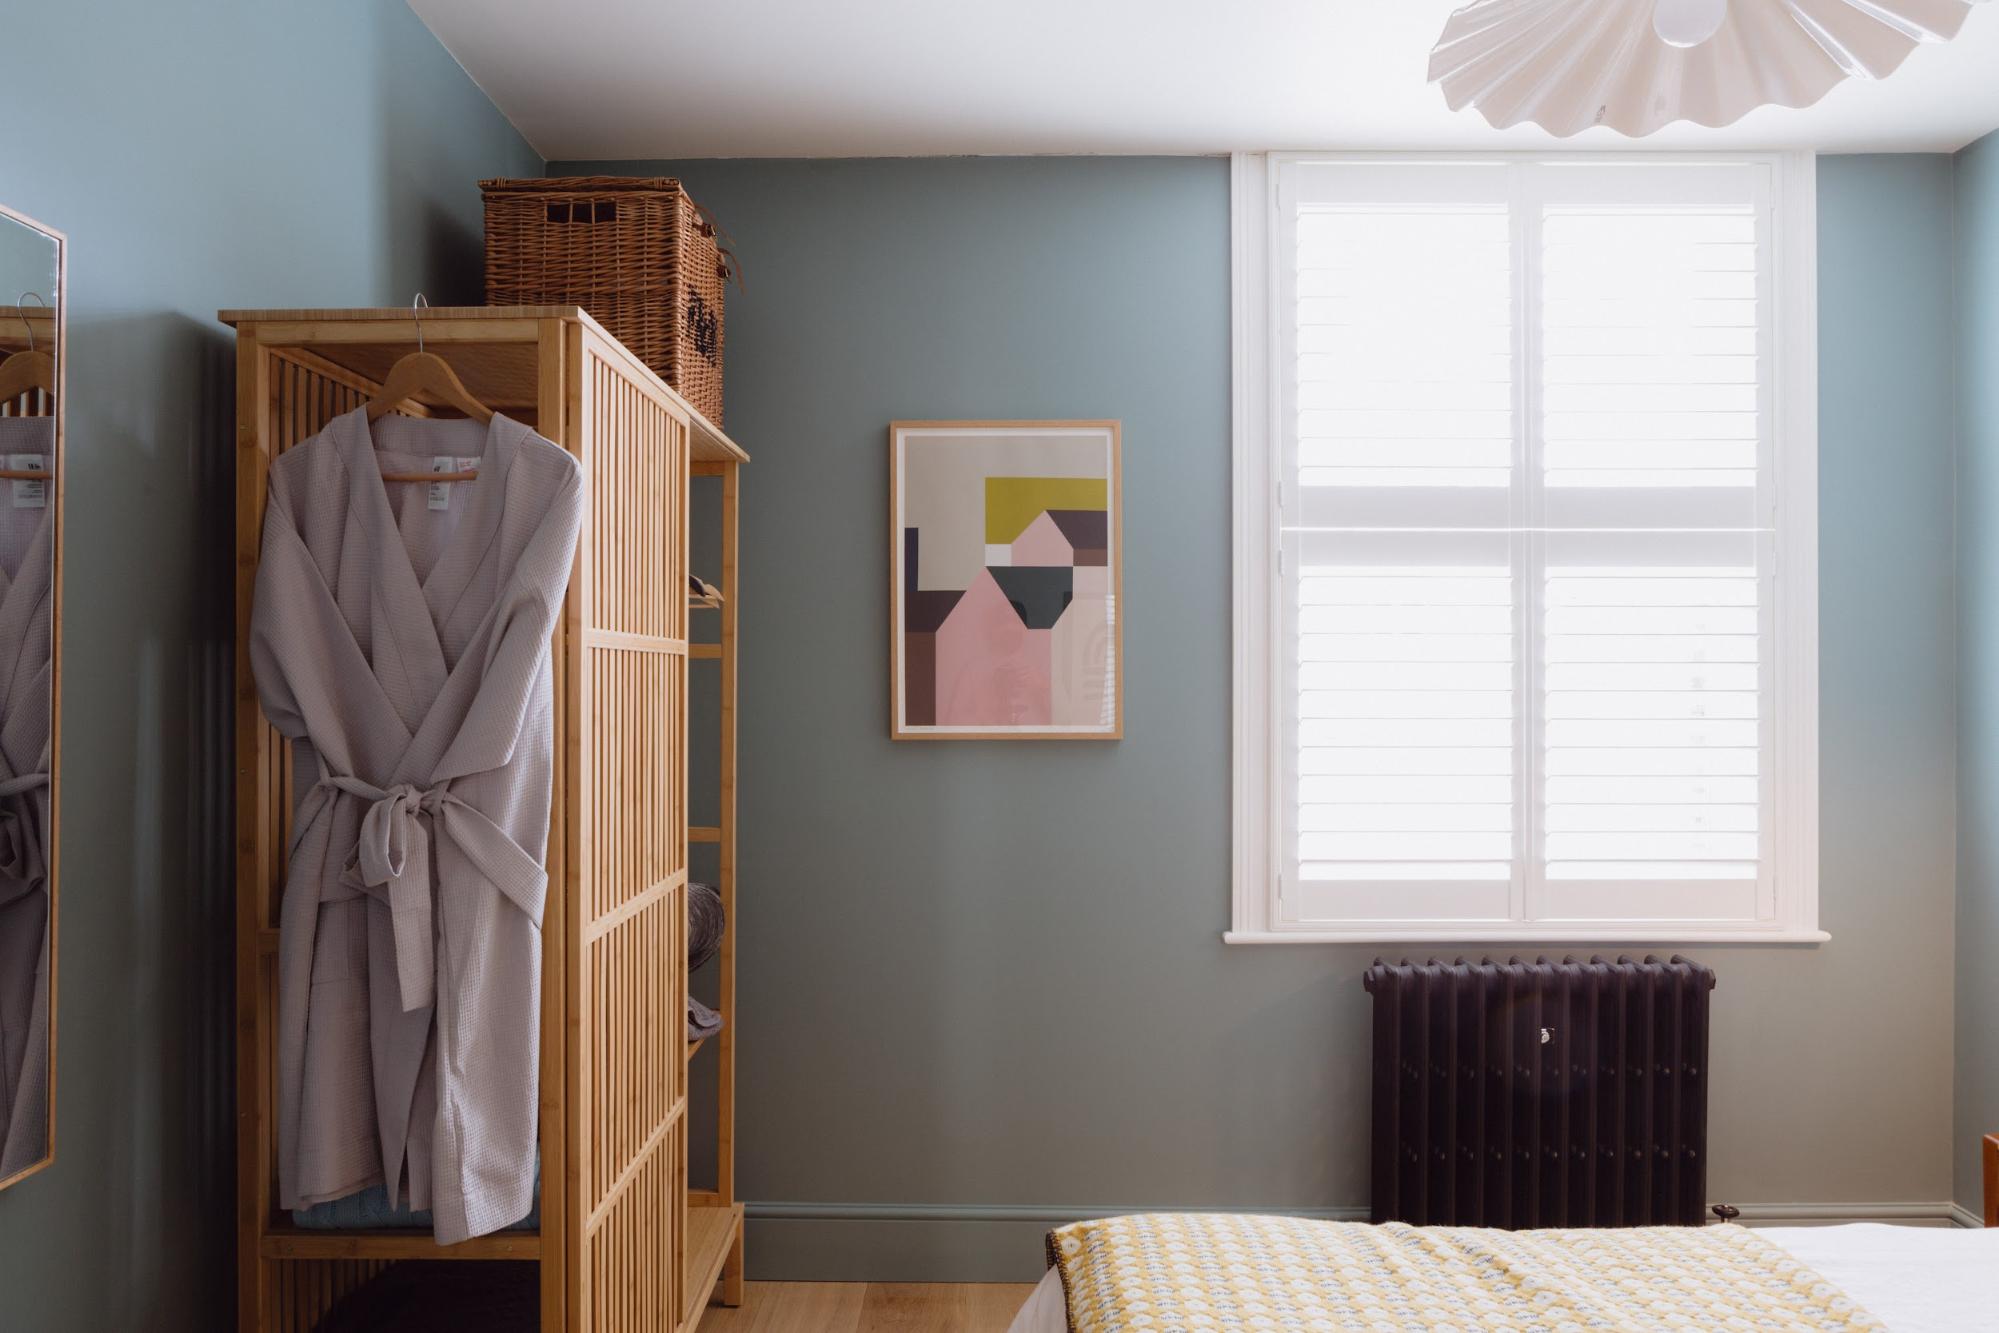 cast iron radiators making a comeback in bedroom